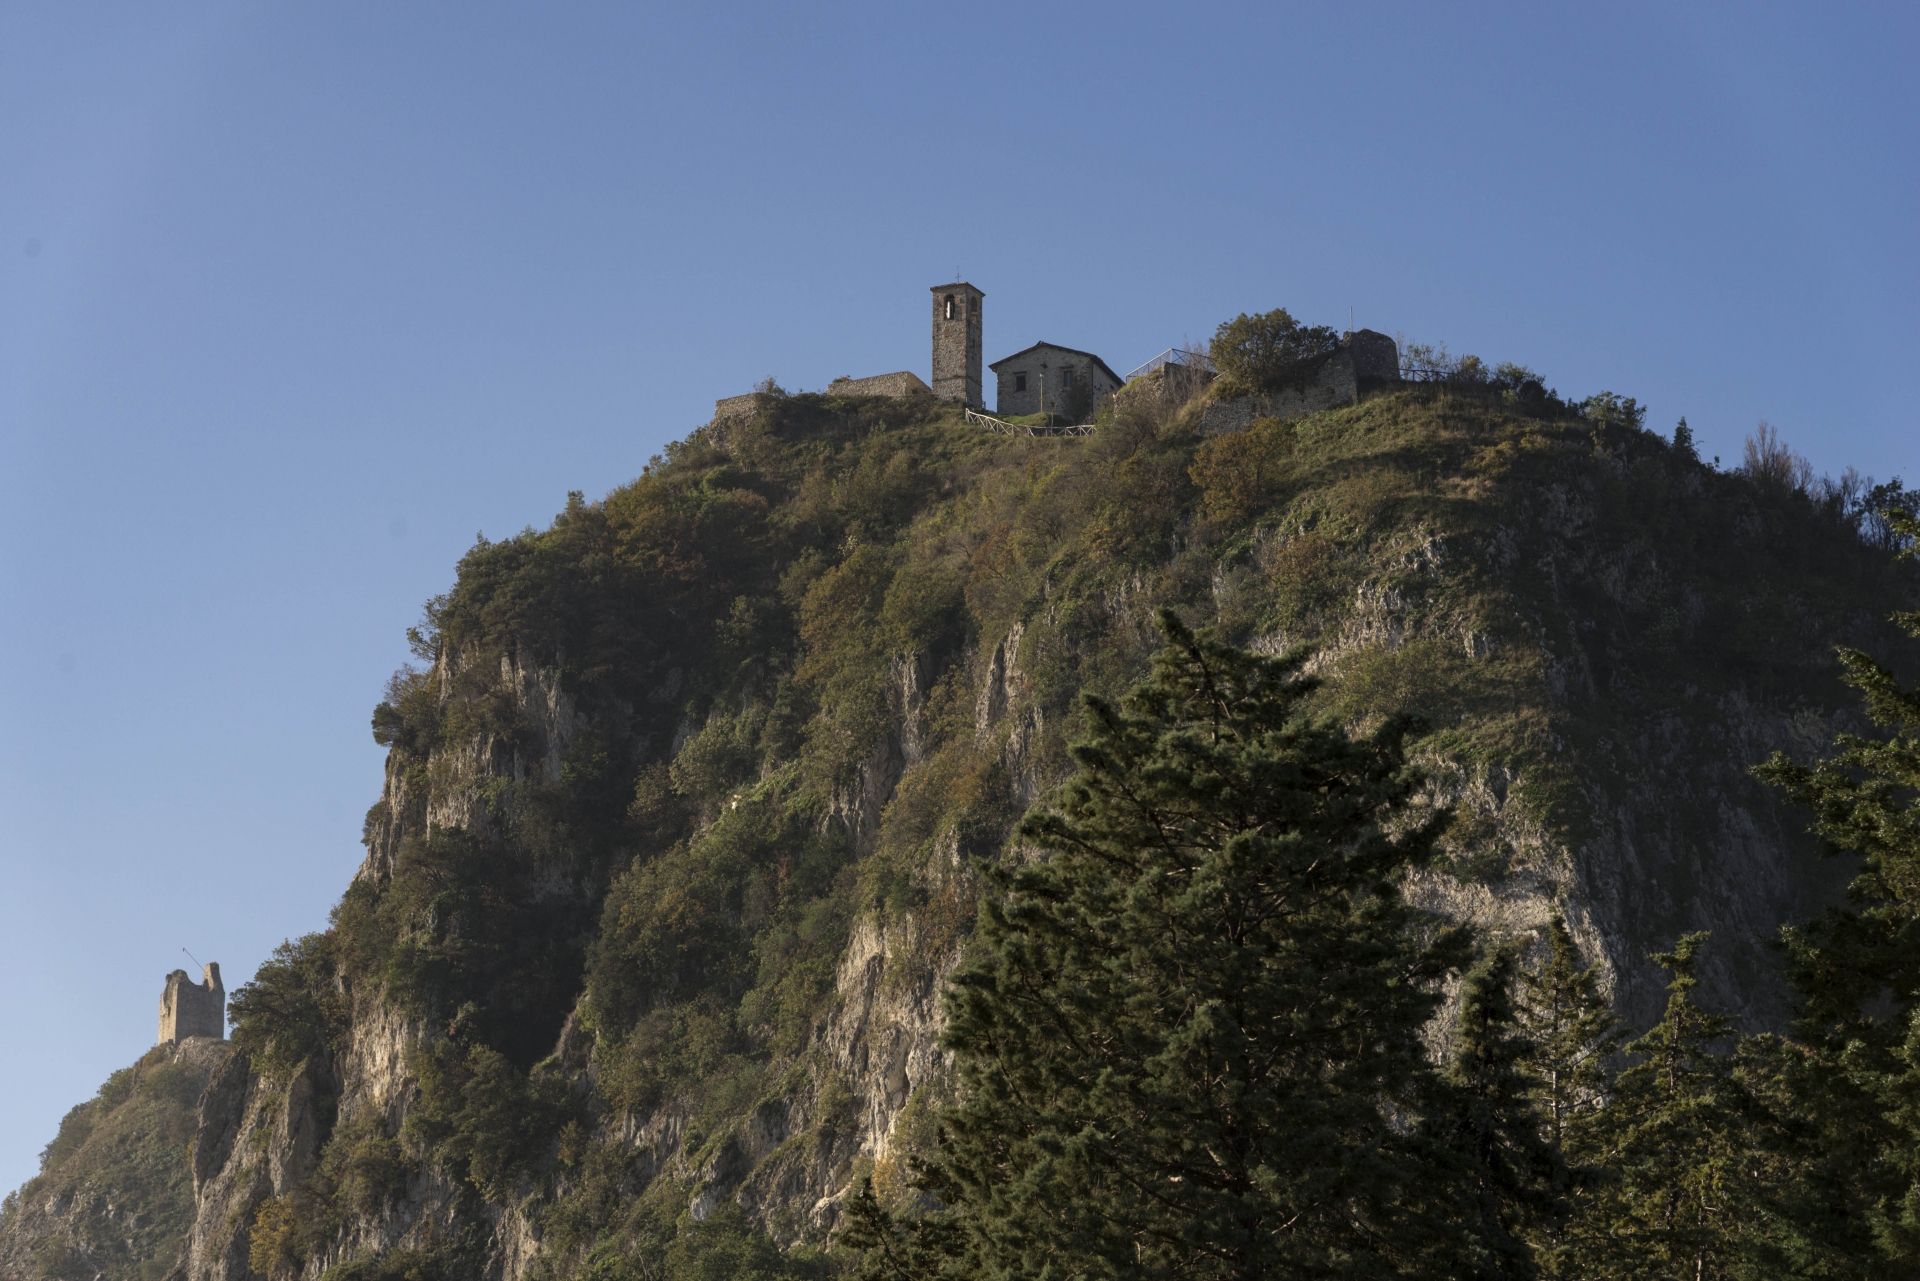 Poggio Torriana | Valmarecchia | Torre Foto(s) von Riccardo Gallini